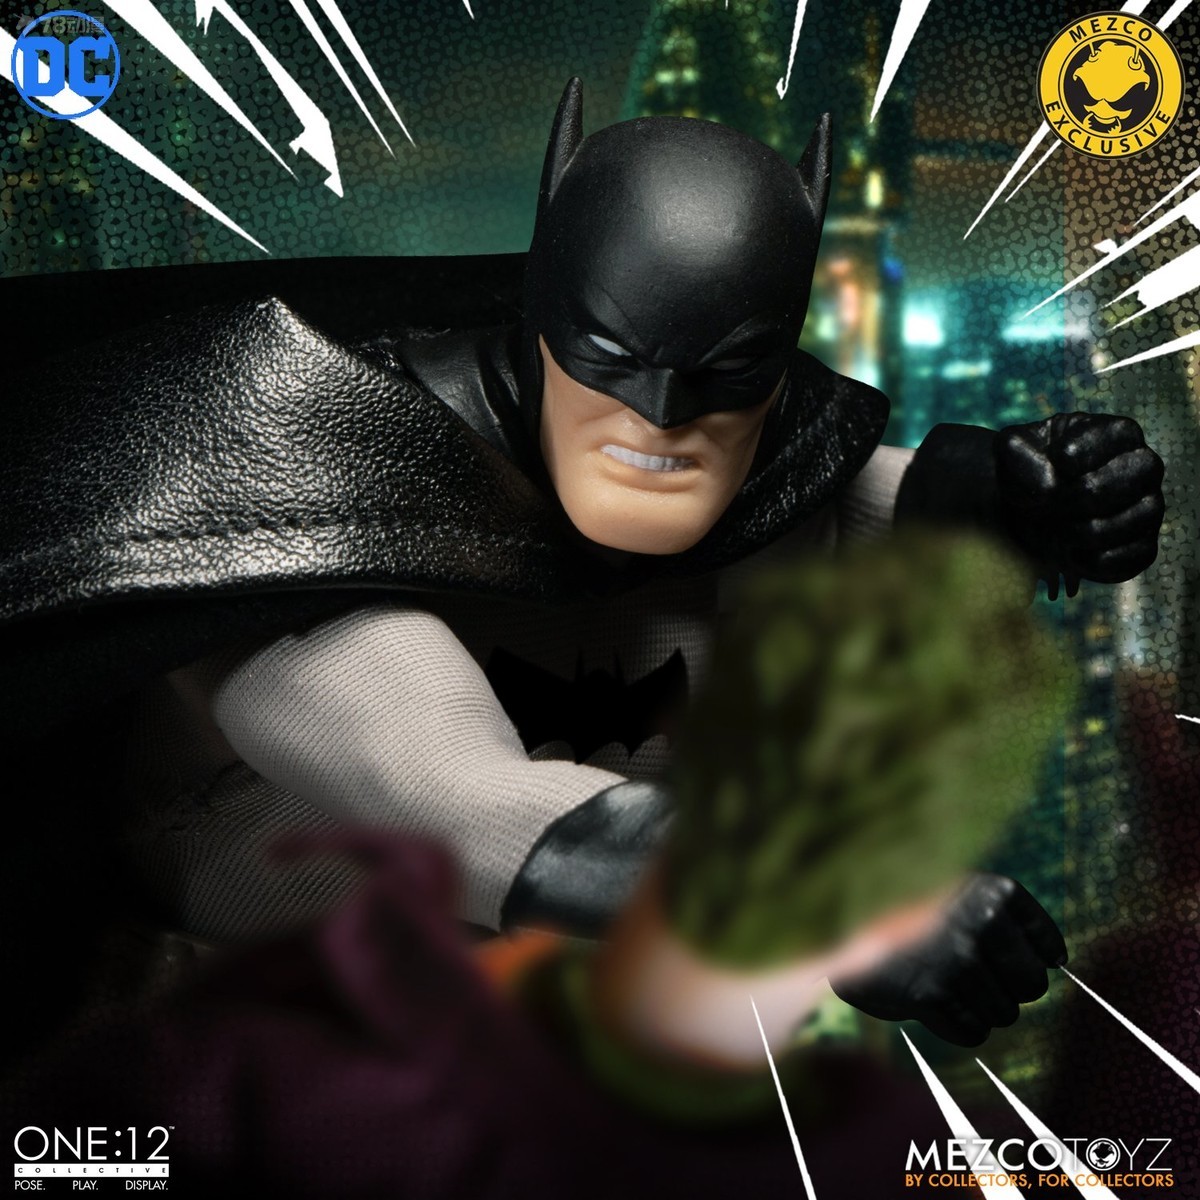 Mezco 新品 1/12集體系列 DC黃金時代 蝙蝠俠 披篷騎士版 可動人偶